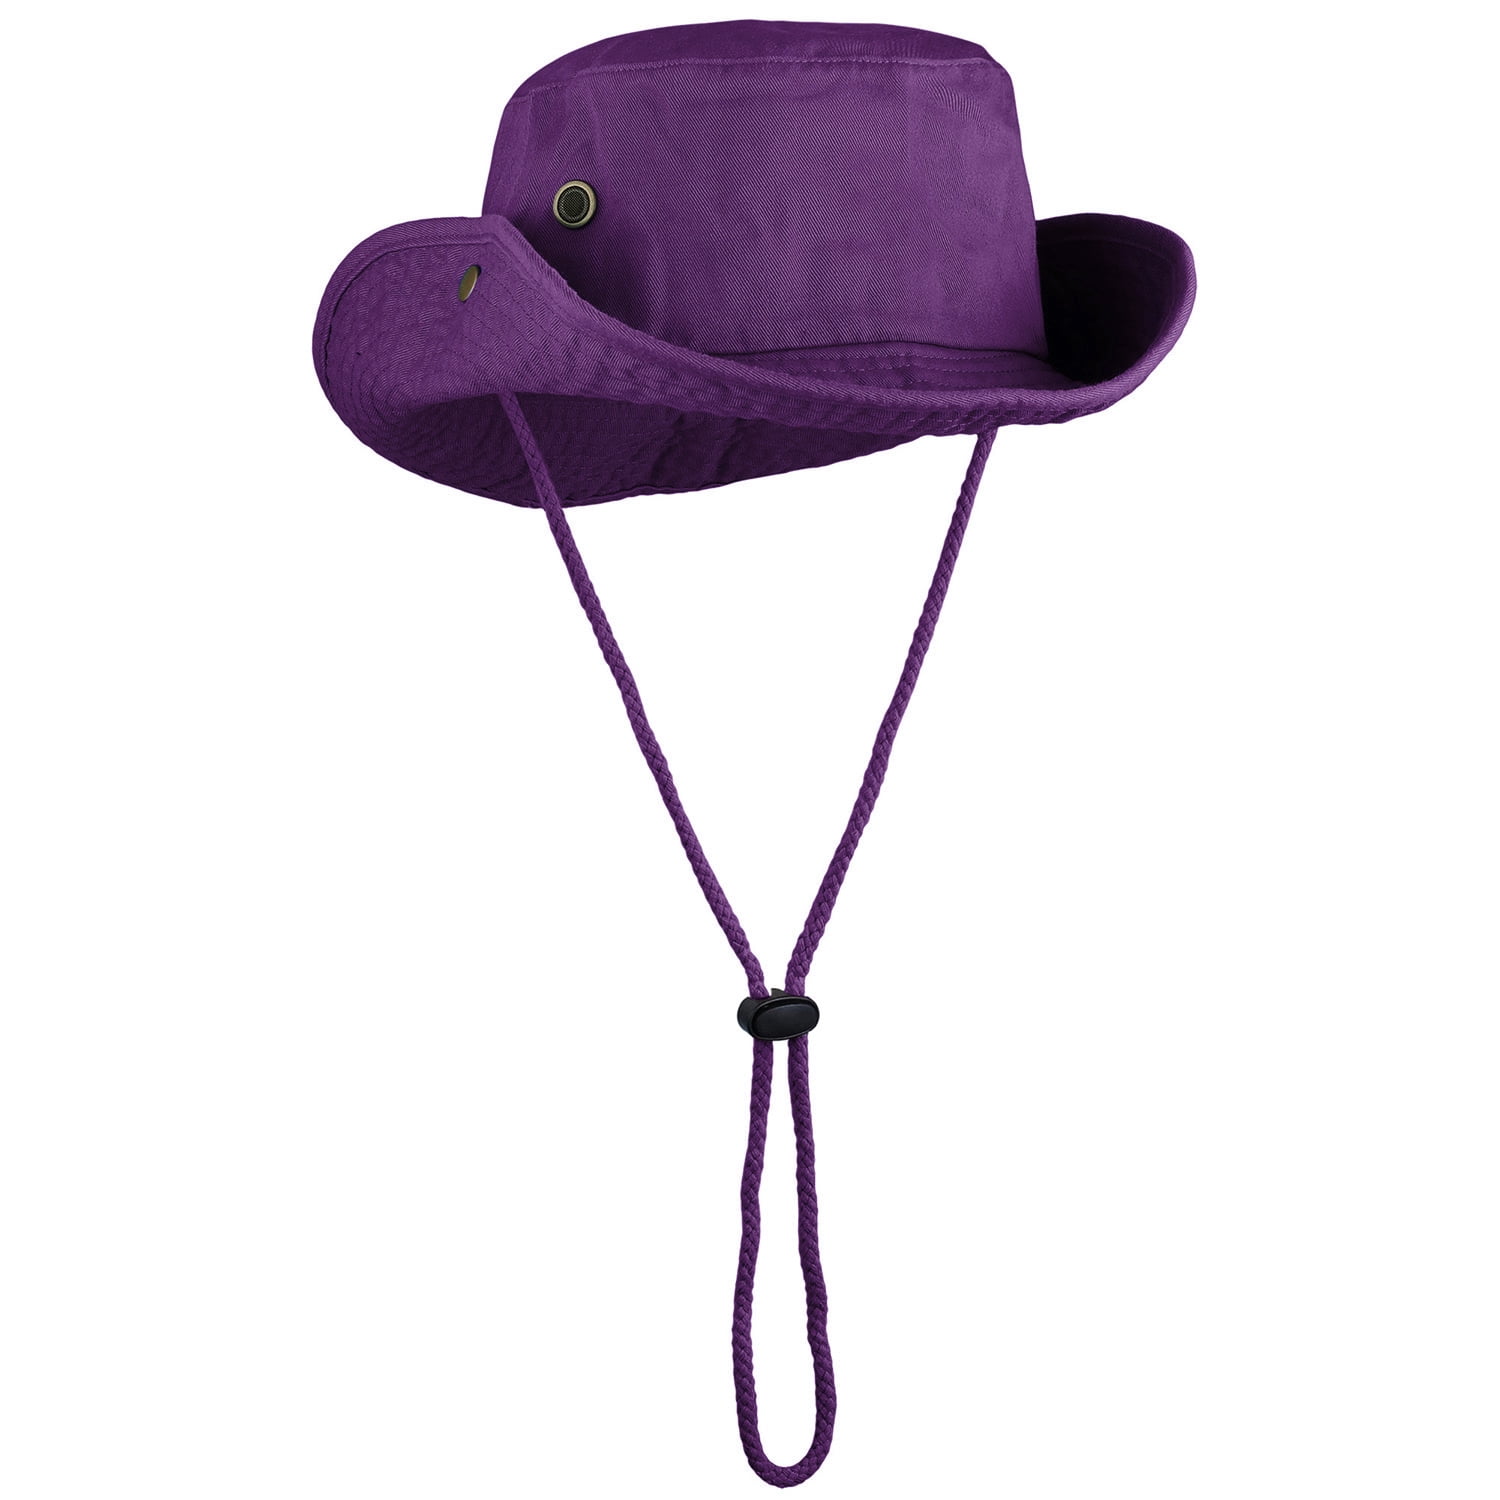 Wide Brim Hiking Fishing Safari Boonie Bucket Hats 100% Cotton UV Sun  Protection For Men Women Outdoor Activities S/M Dark Brown 